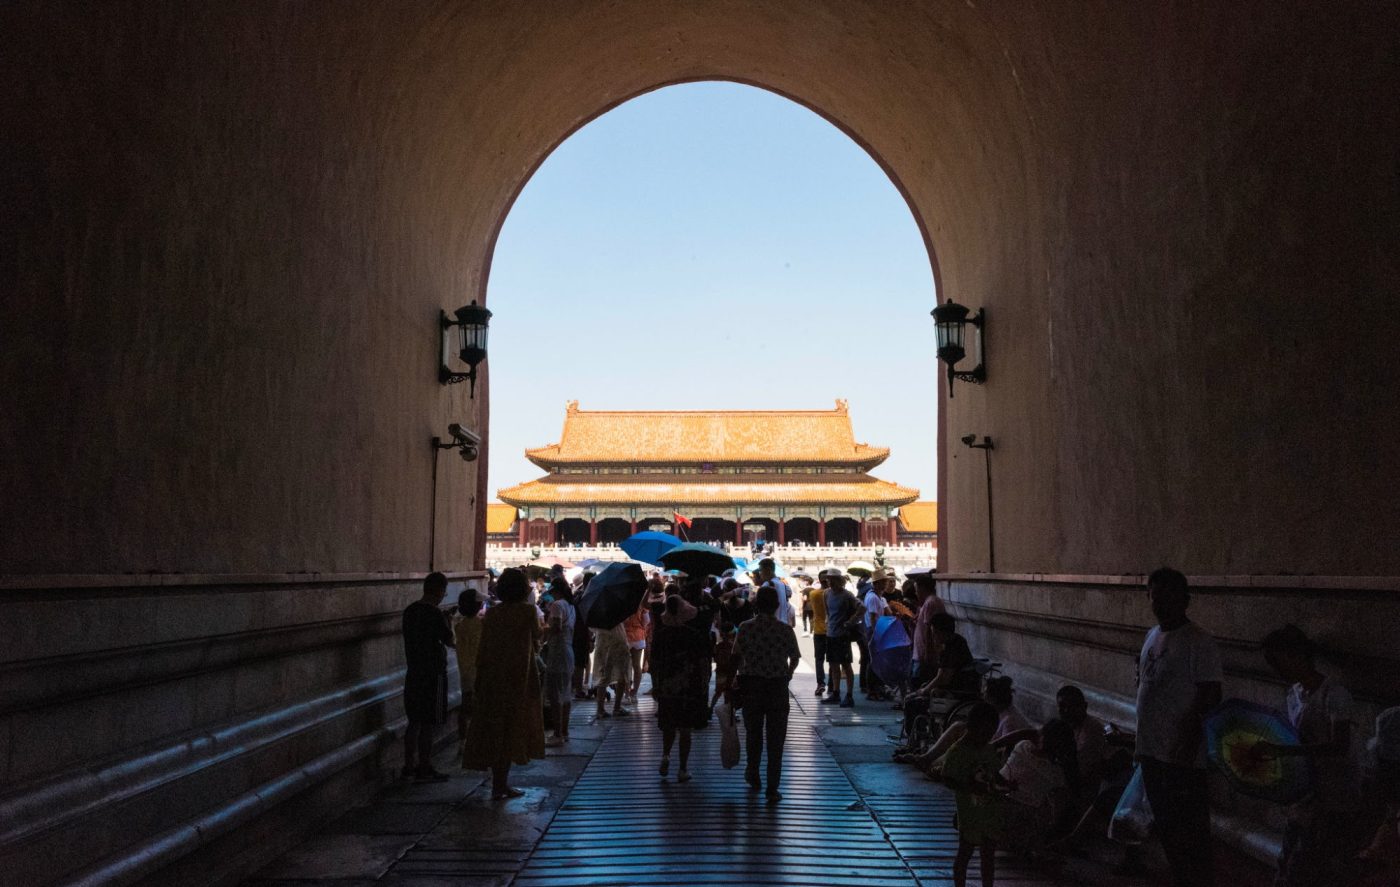 Photo: "People visiting the Forbidden City" by David Yu via Pexels under CC0 1.0 Public Domain.